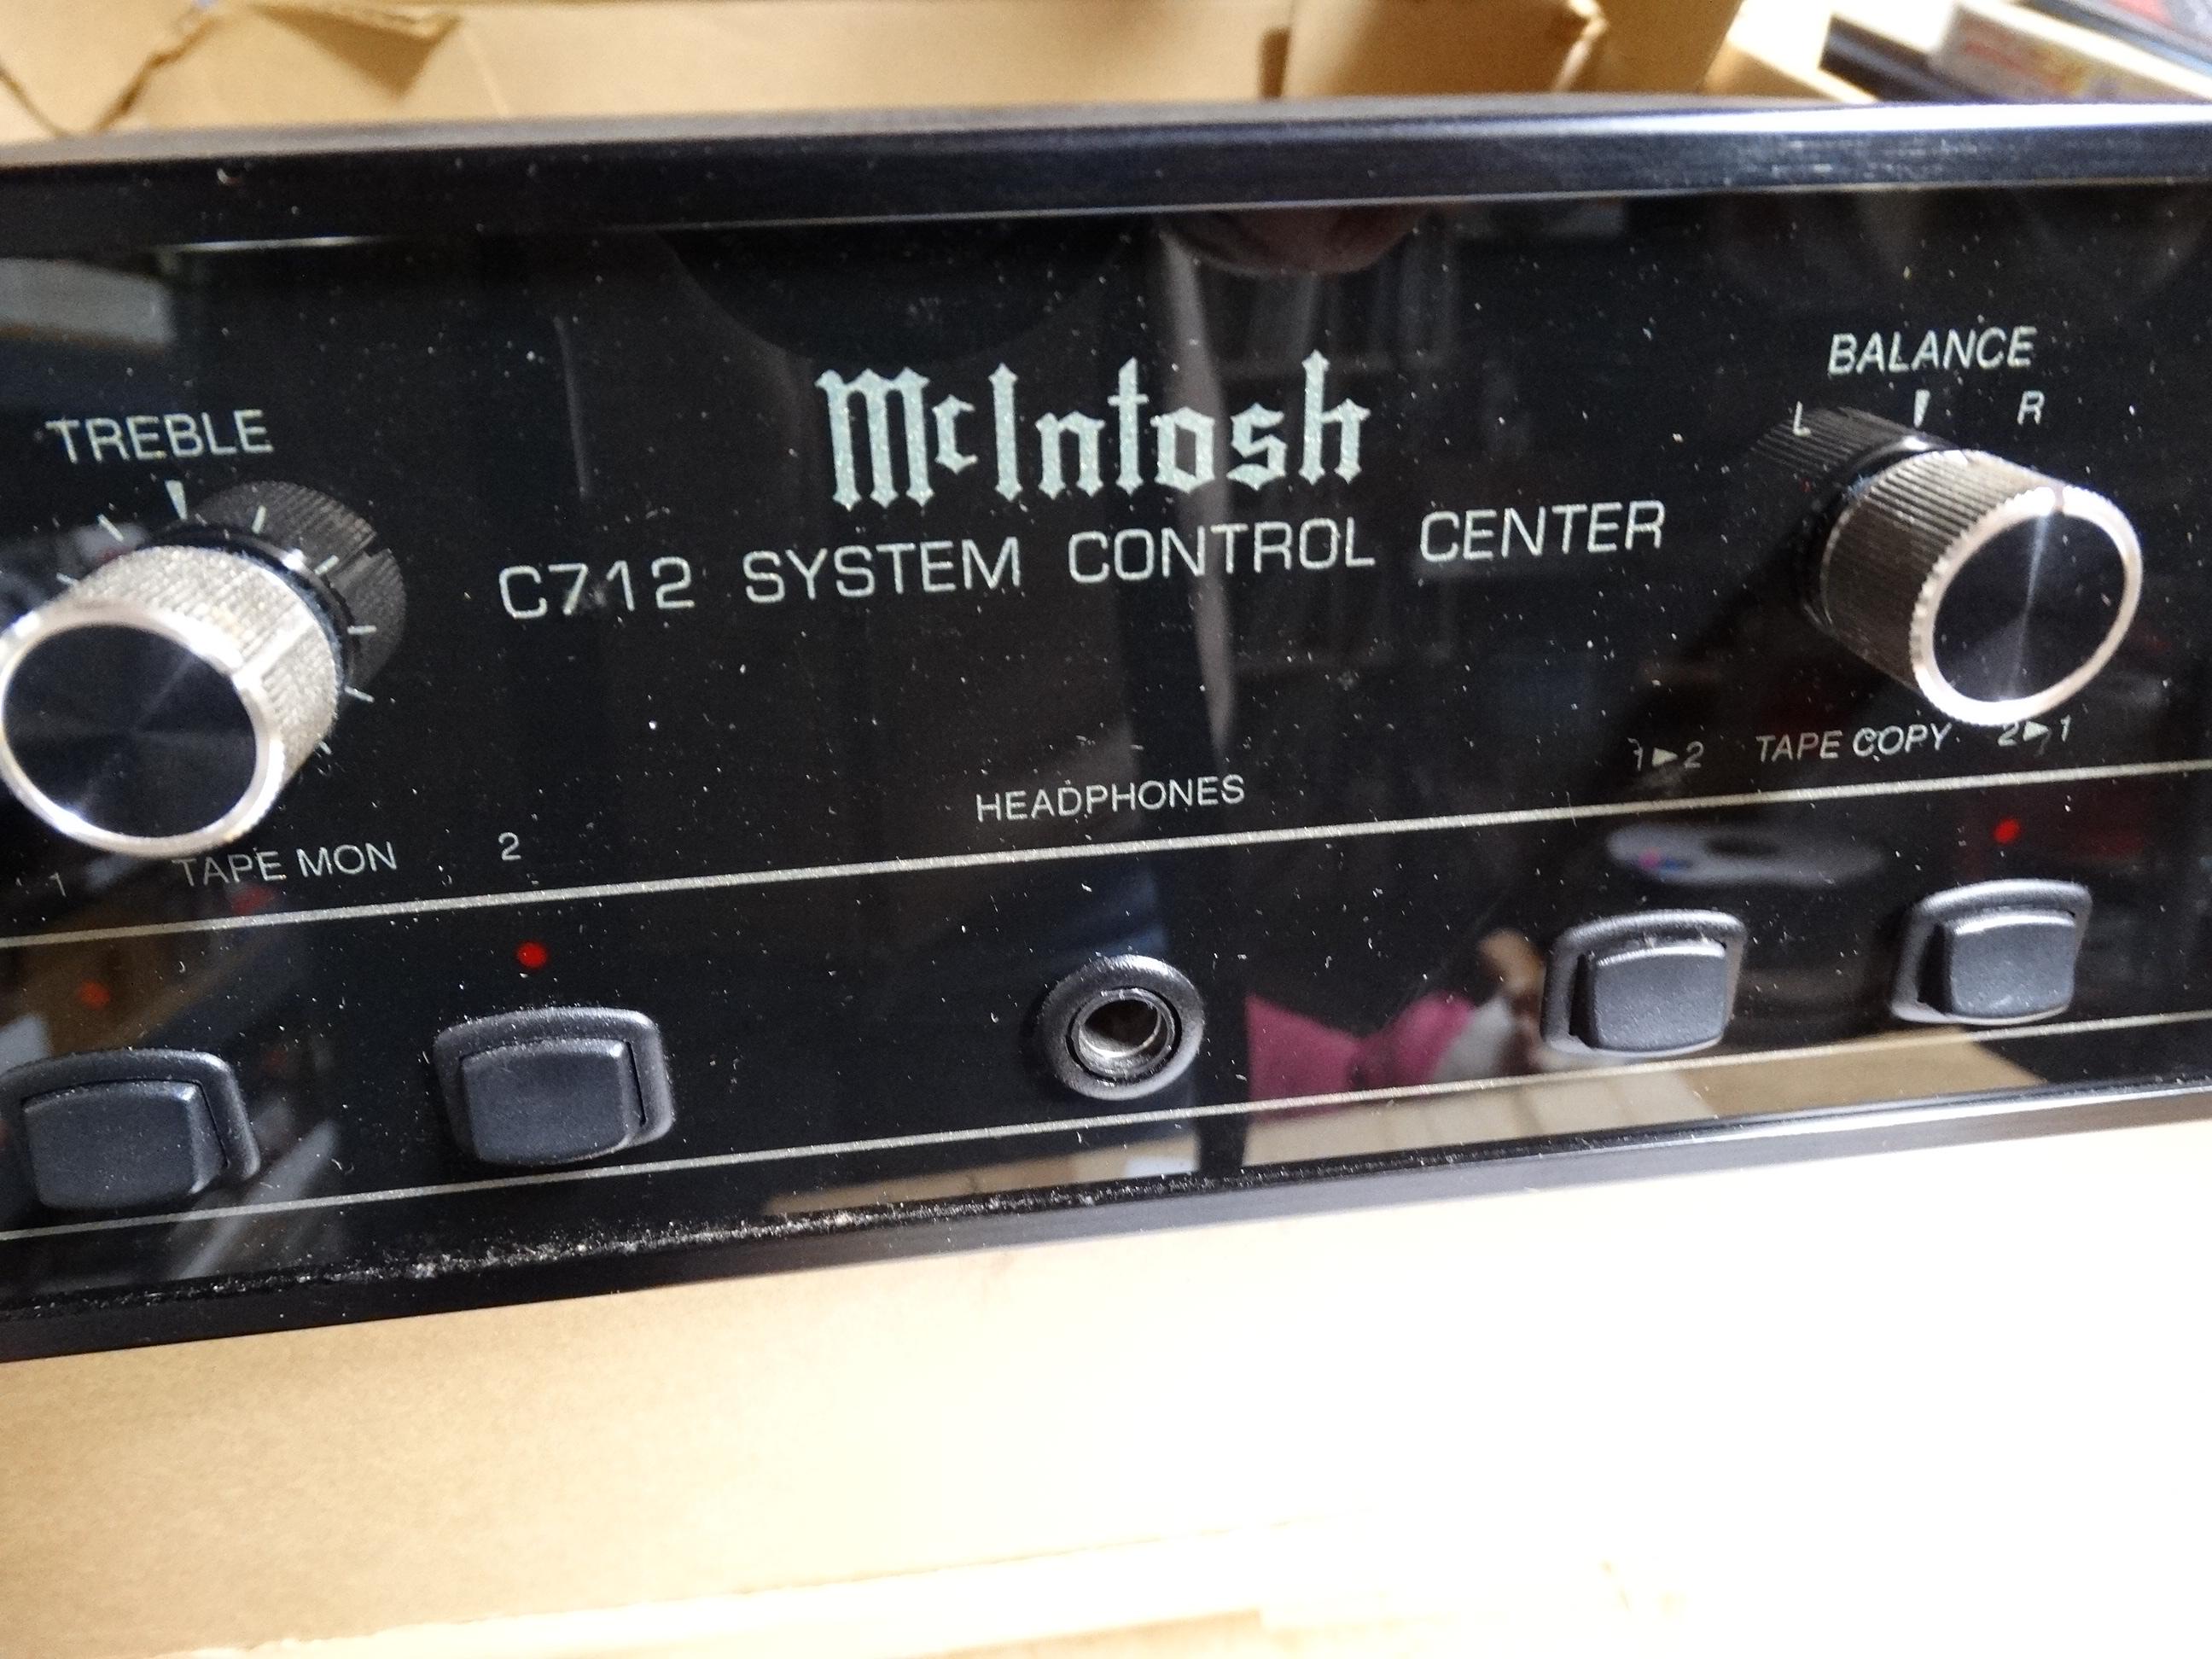 McIntosh CS712 System Control Center